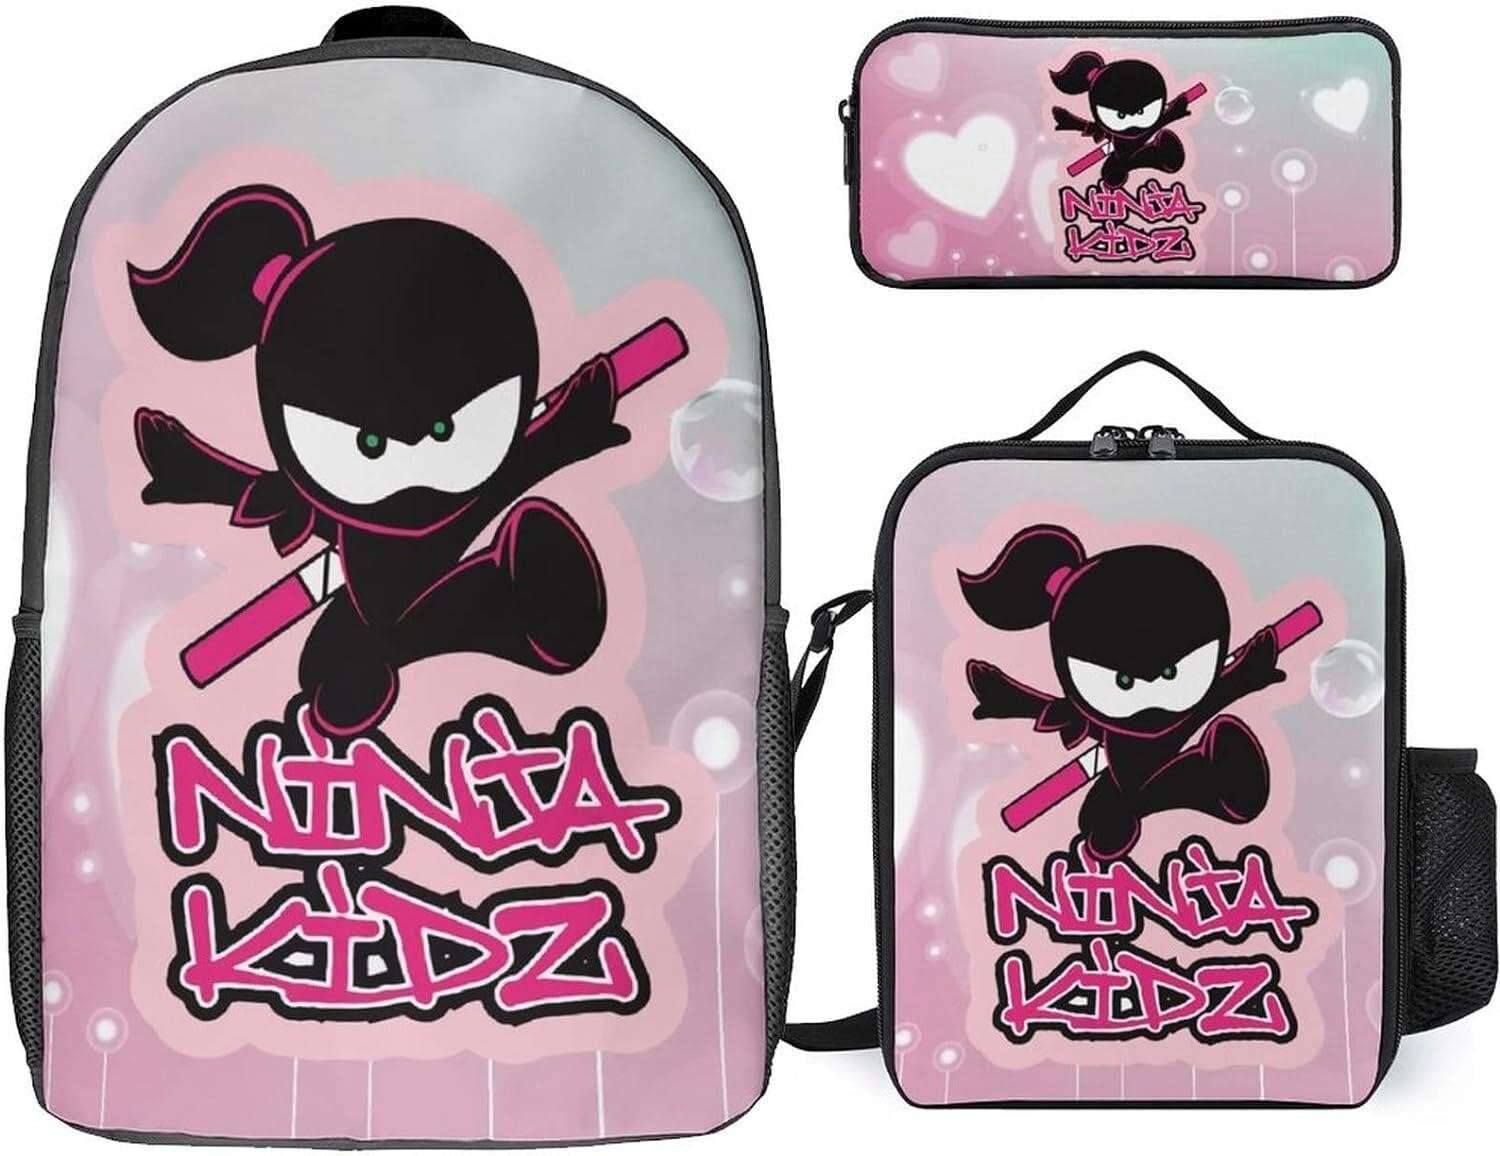 Ninja Kidz 3-in-1 Backpack  Lunch Box & Case